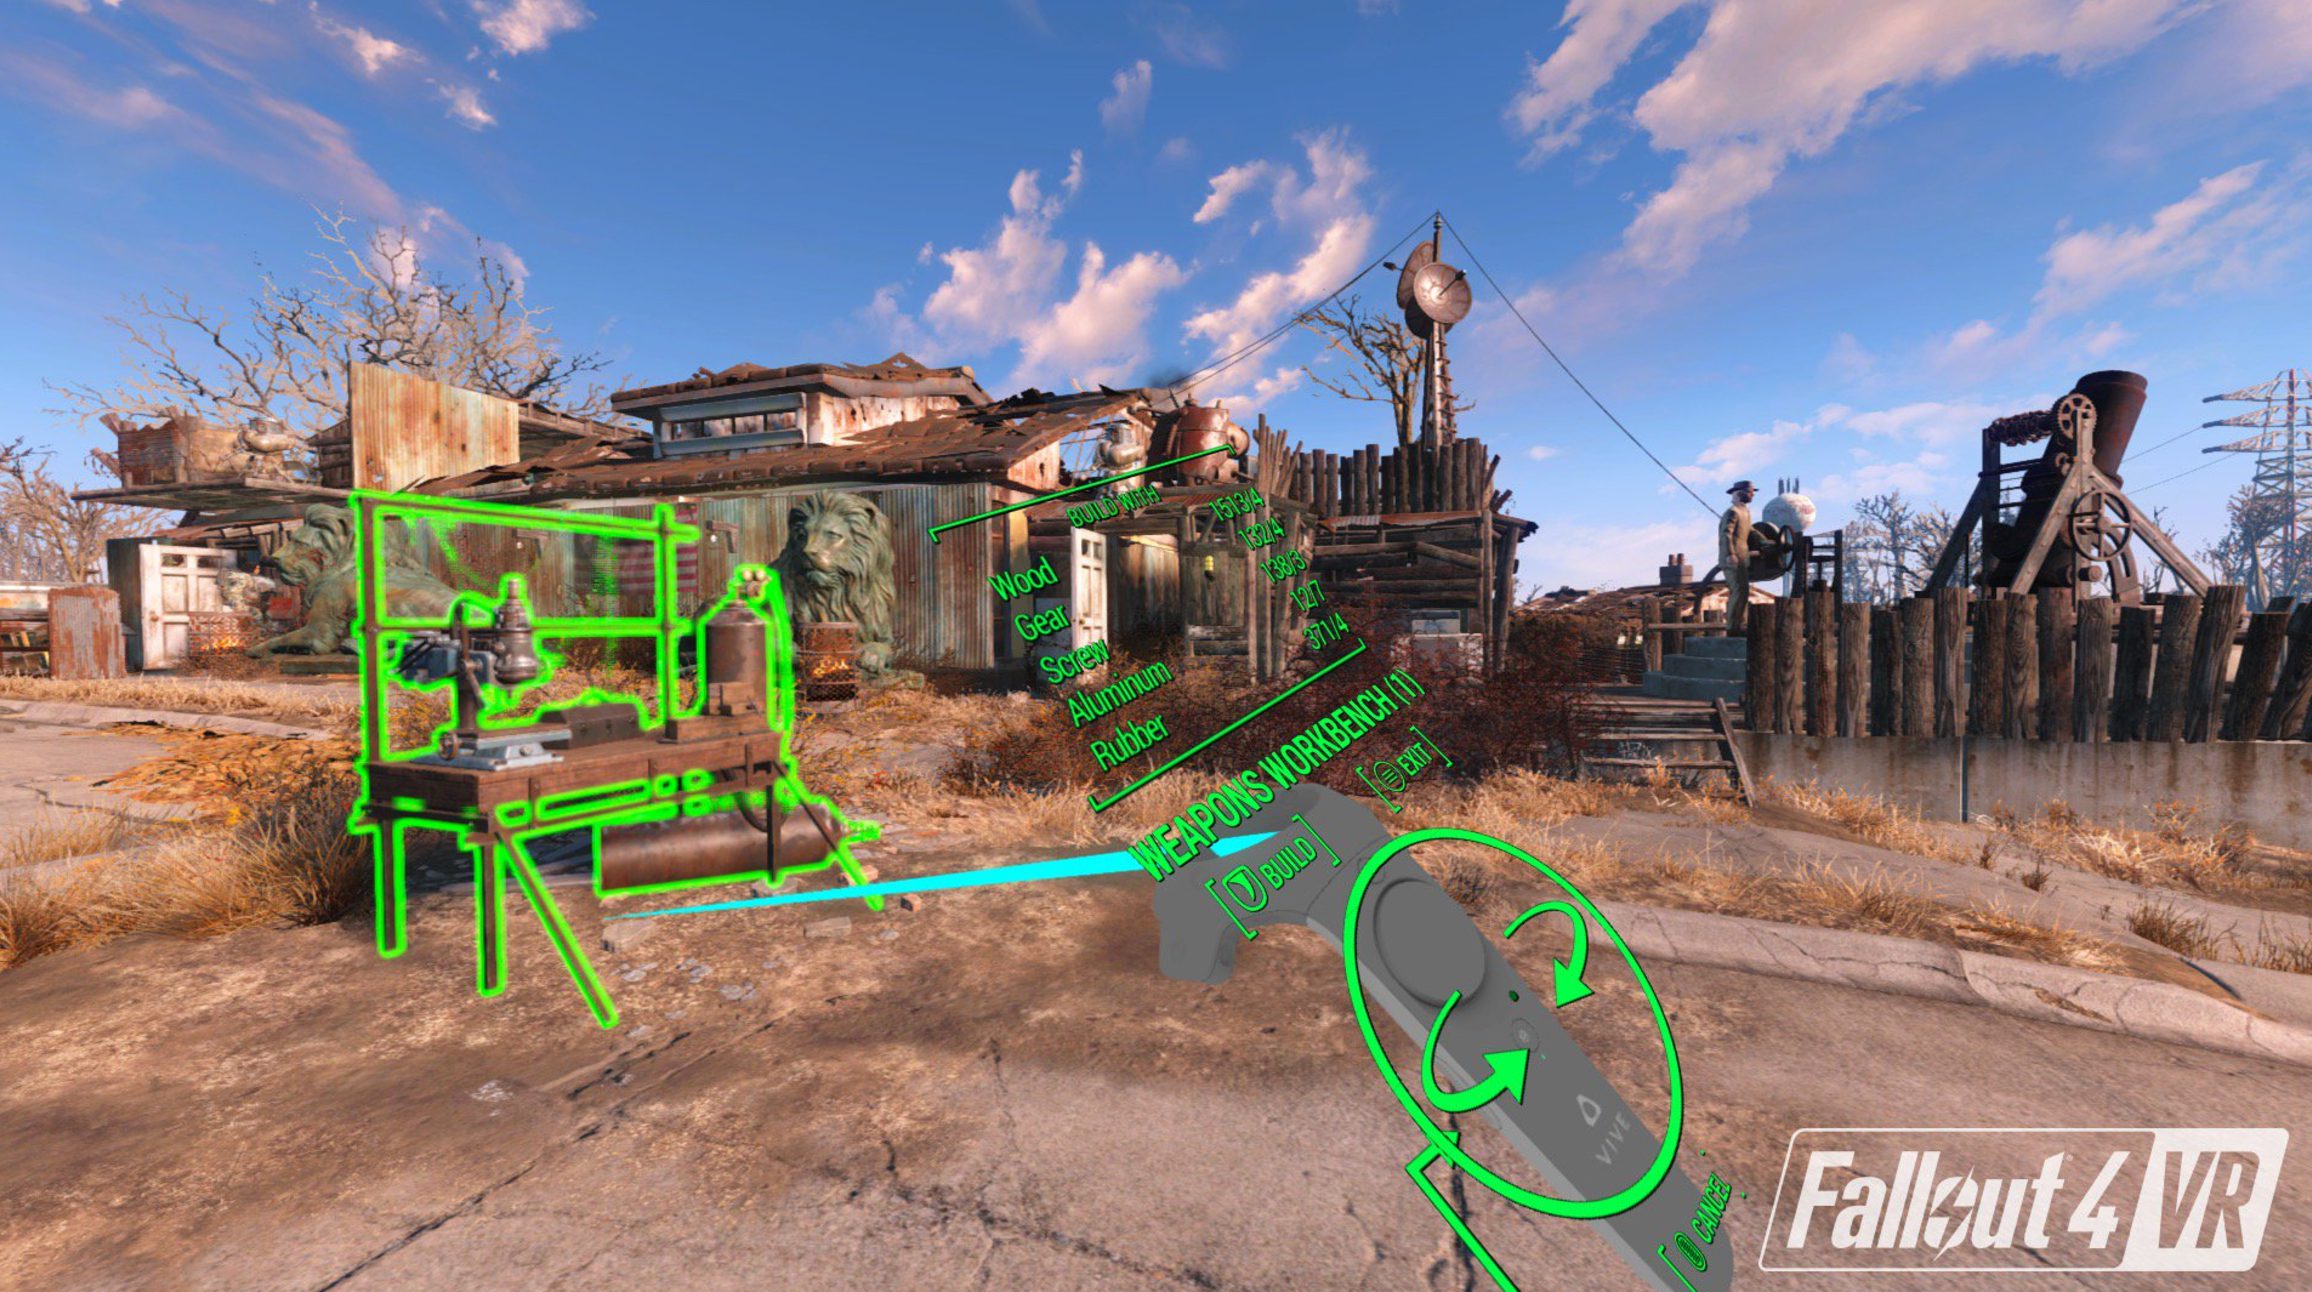 1 motivo para reservar Fallout 4 VR y 4 motivos para esperar